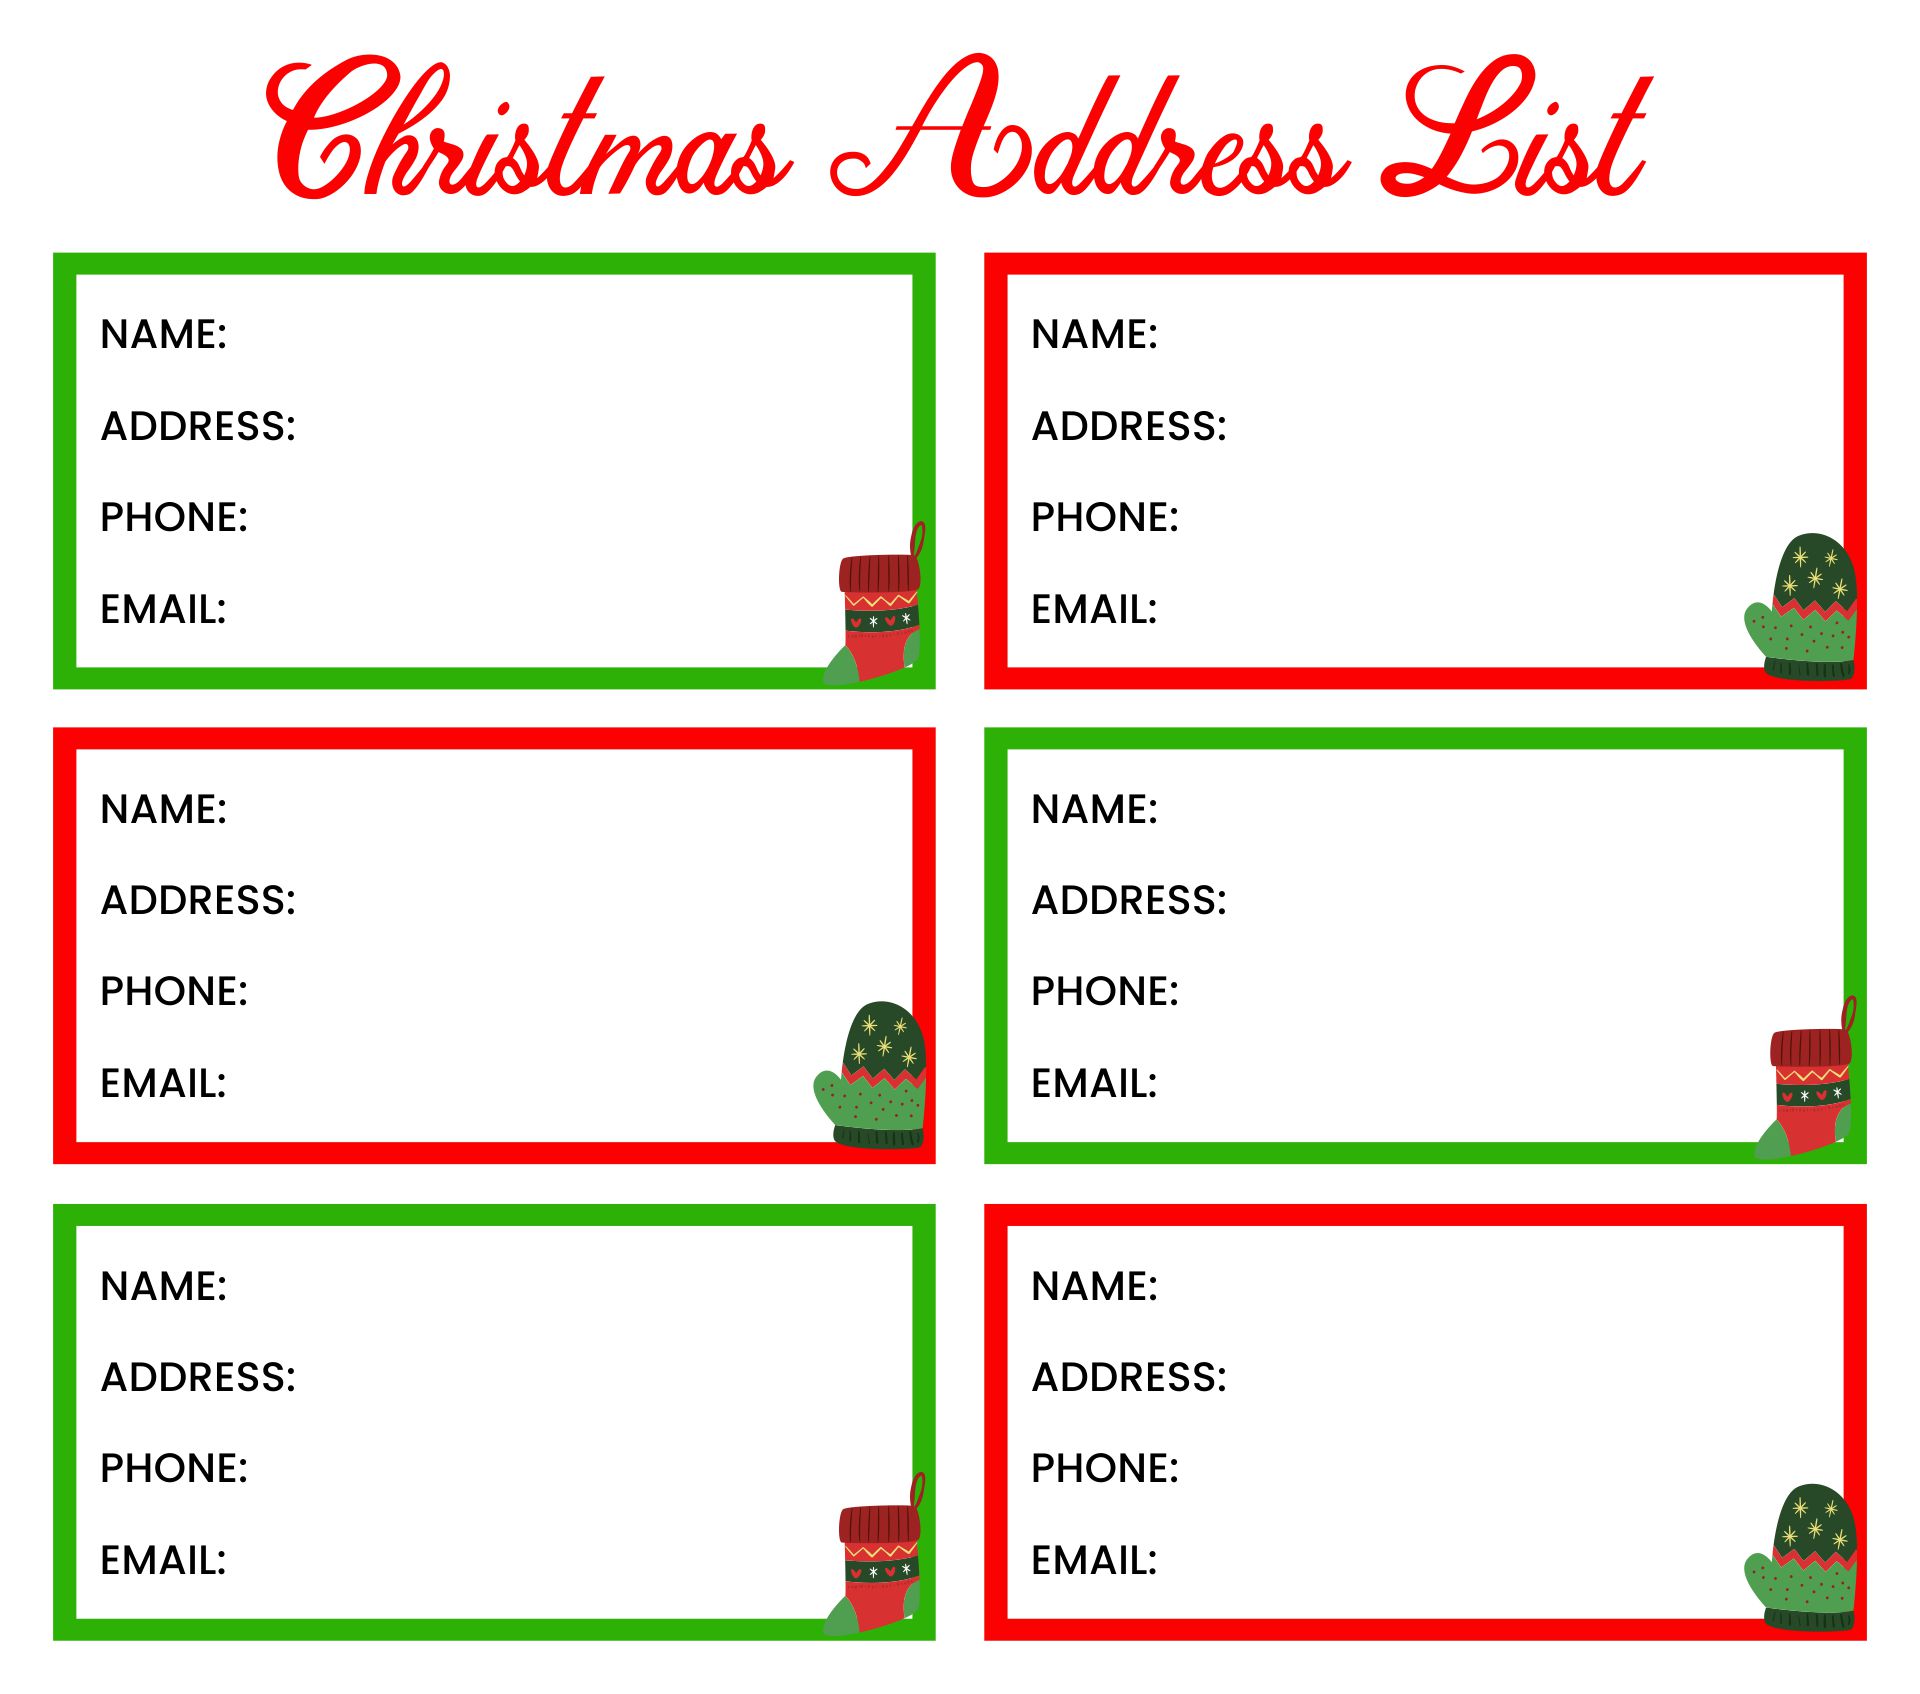 Printable Christmas Card Address List With Template